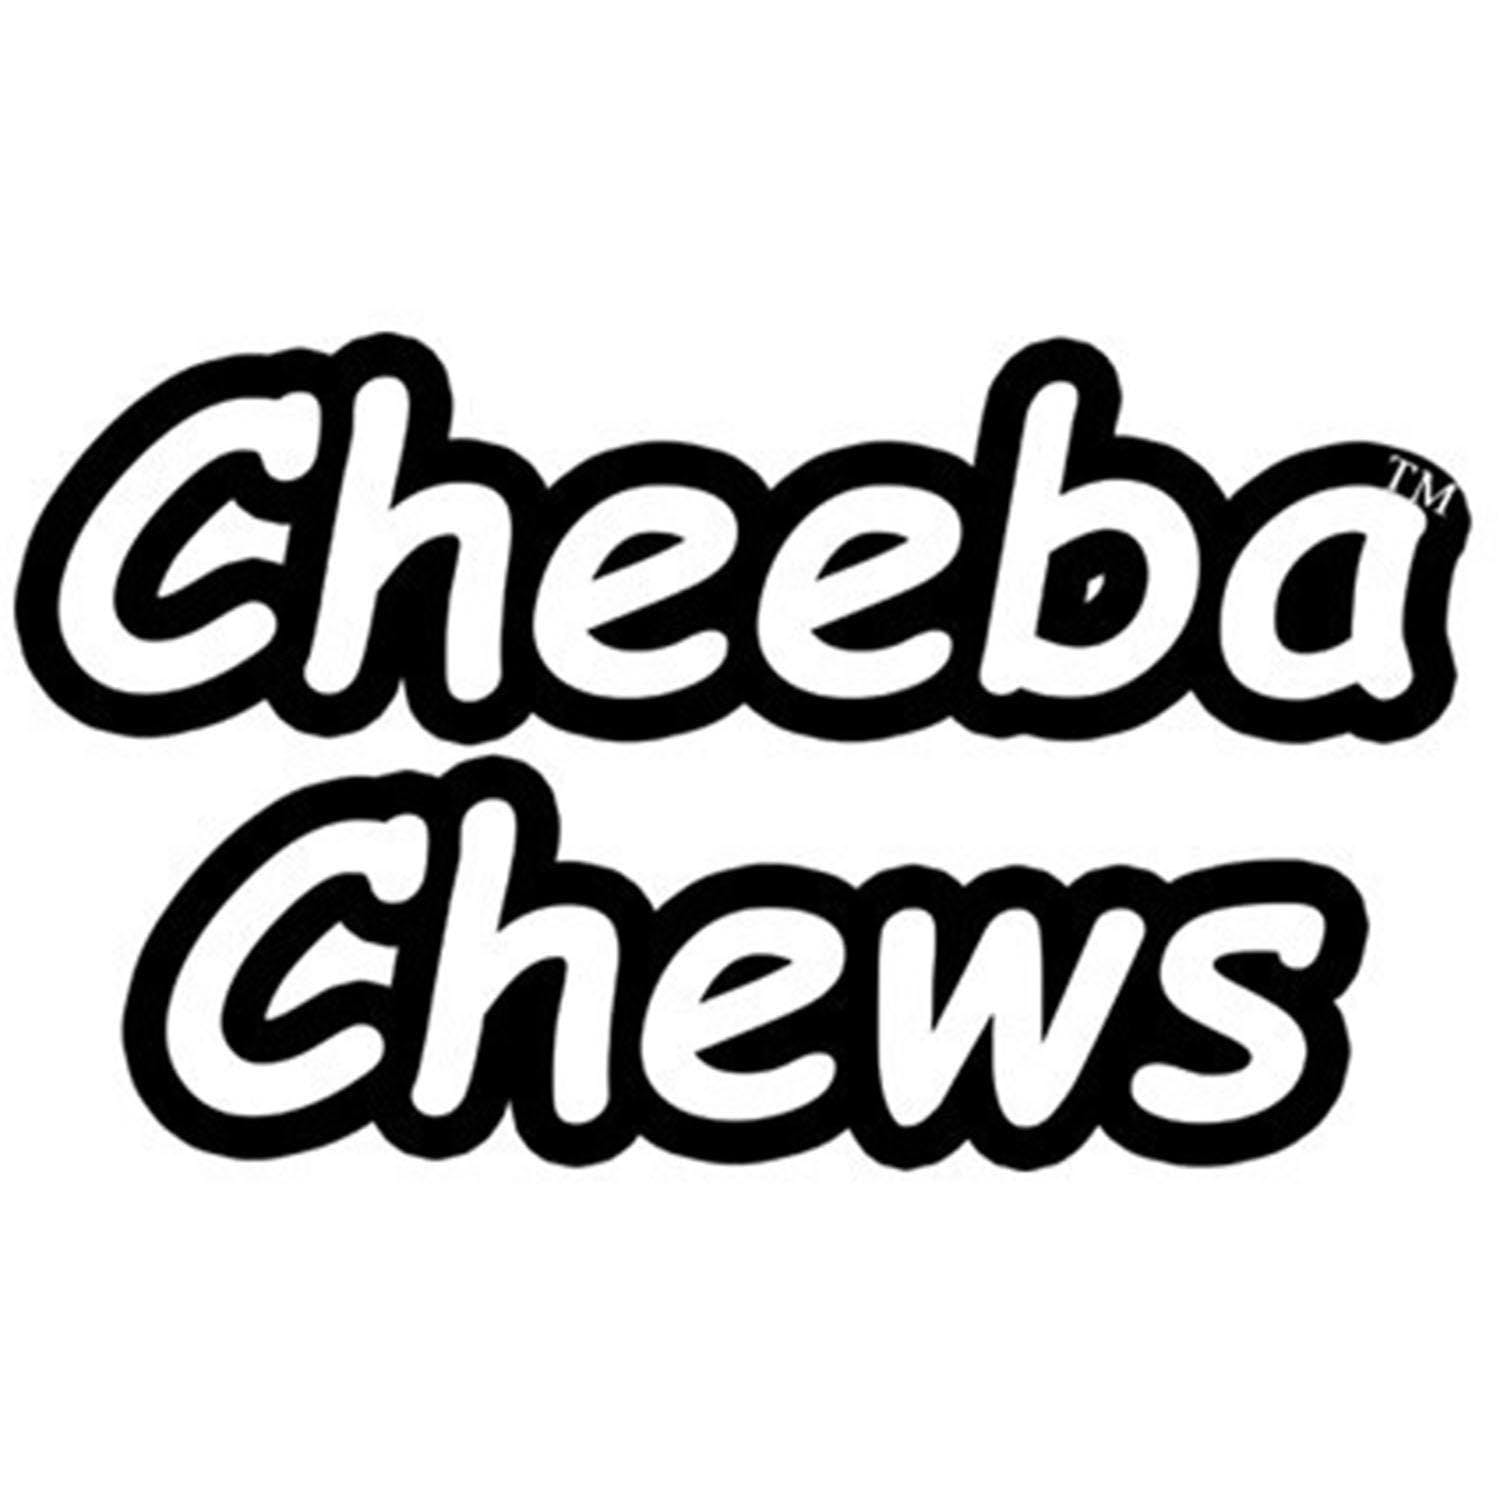 edible-cheeba-chews-hybrid-carmel-100mg